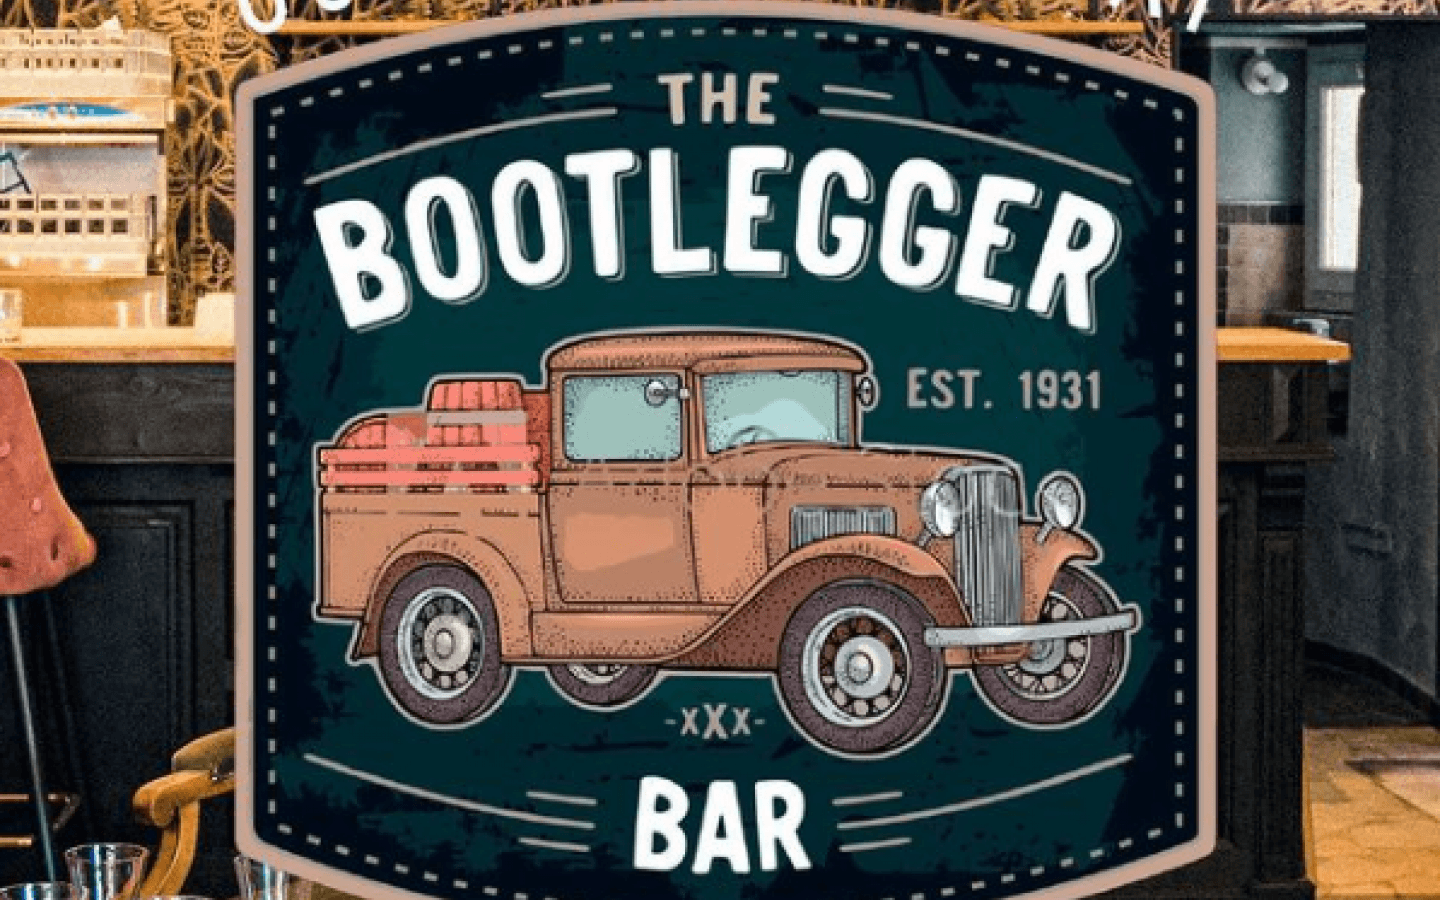 The Bootlegger Bar